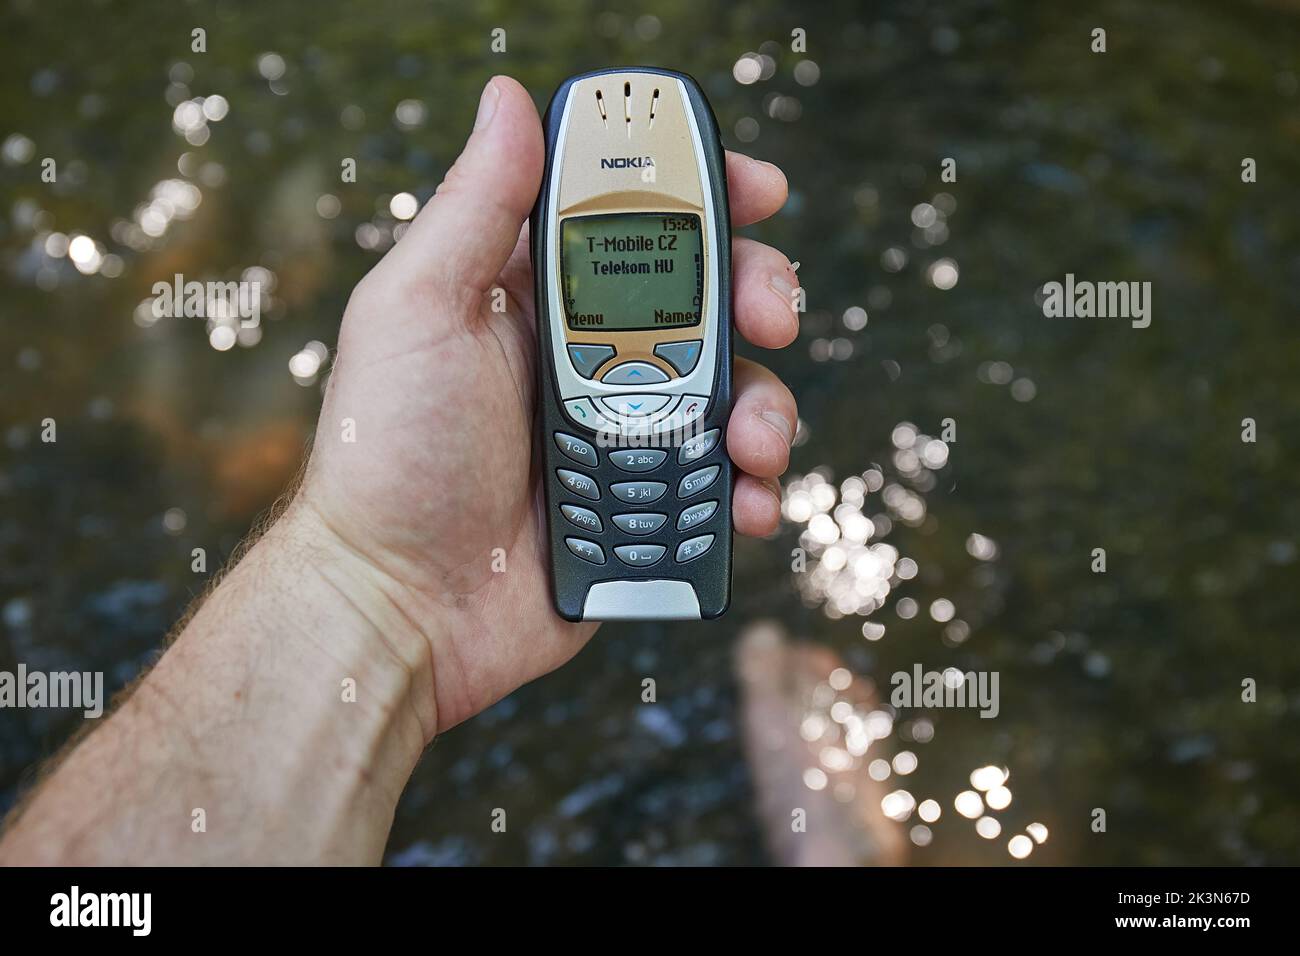 Old Nokia mobile phone outdoors Stock Photo